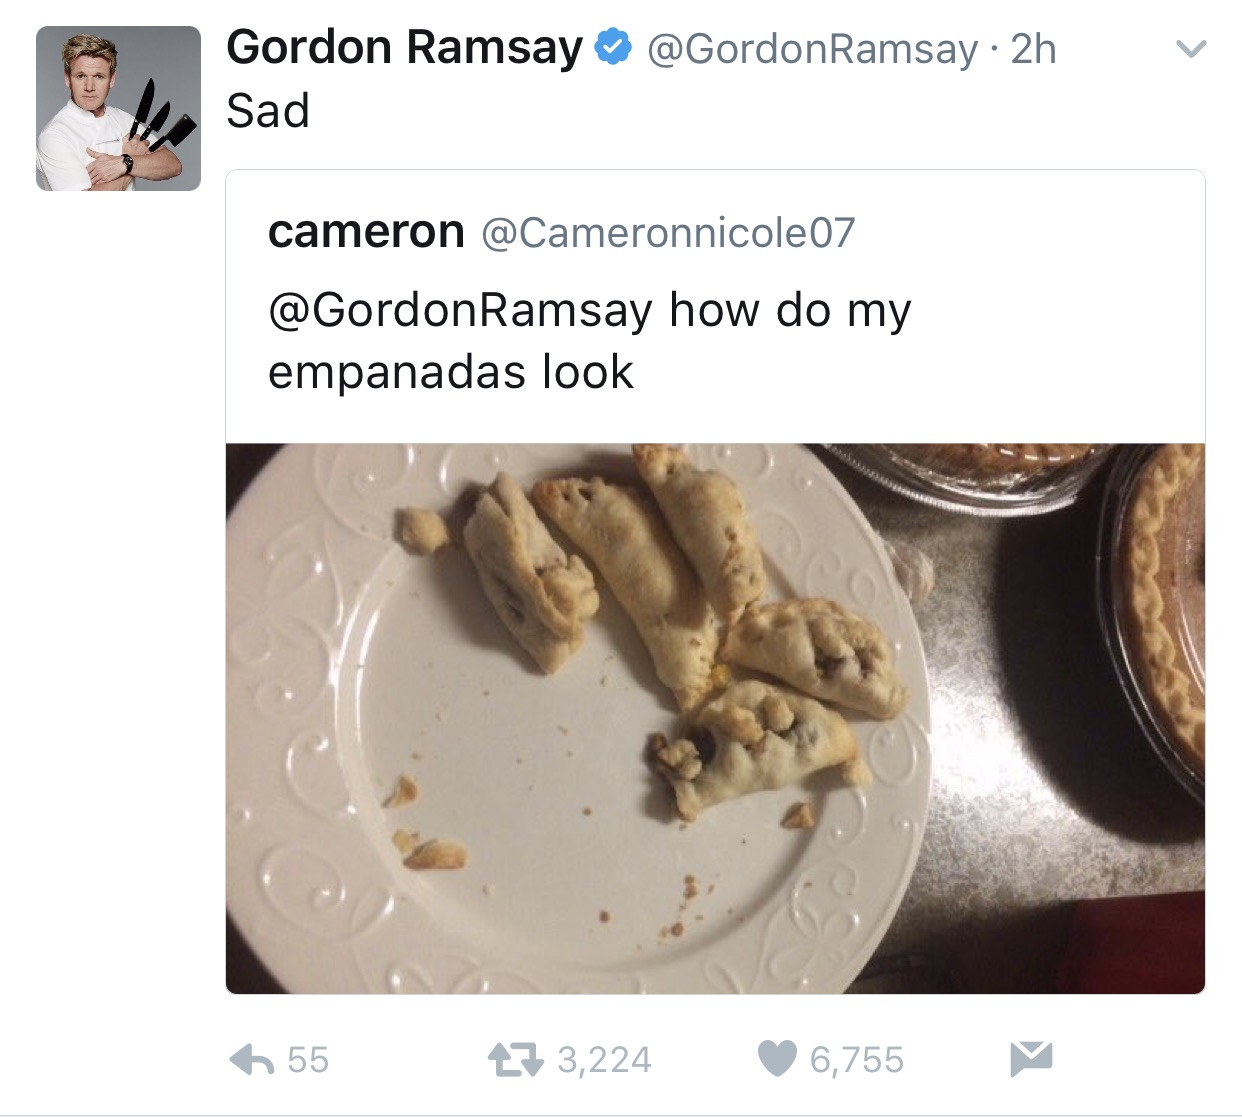 tweet - gordon ramsay twitter memes - Ramsay 2h Gordon Ramsay Sad cameron Ramsay how do my empanadas look 6 55 27 3,224 6,755